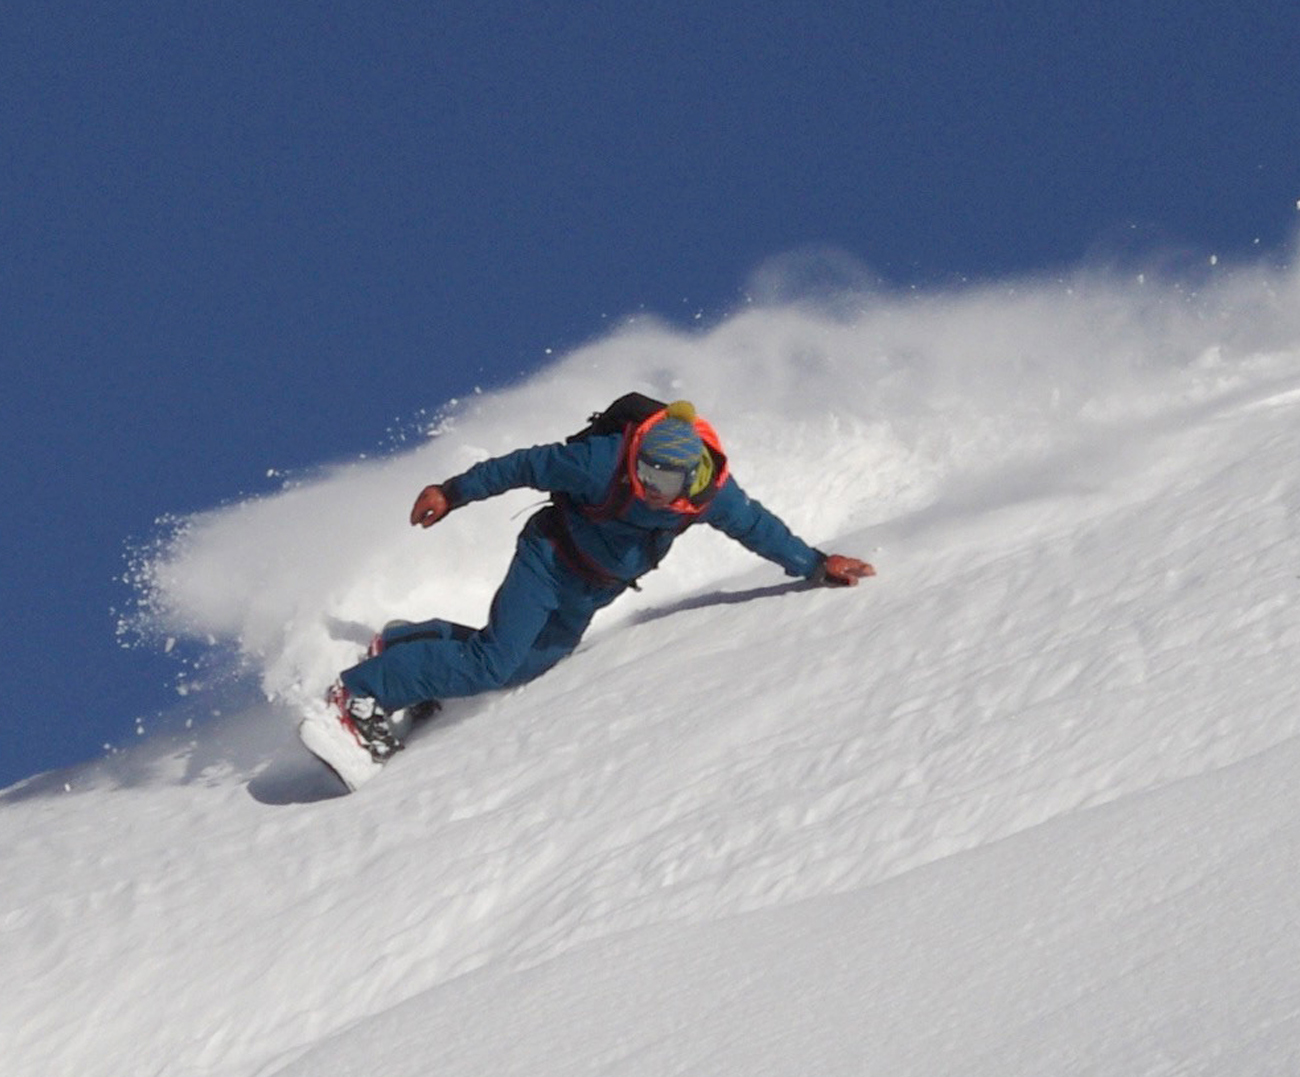 Snowboarder carving off-piste